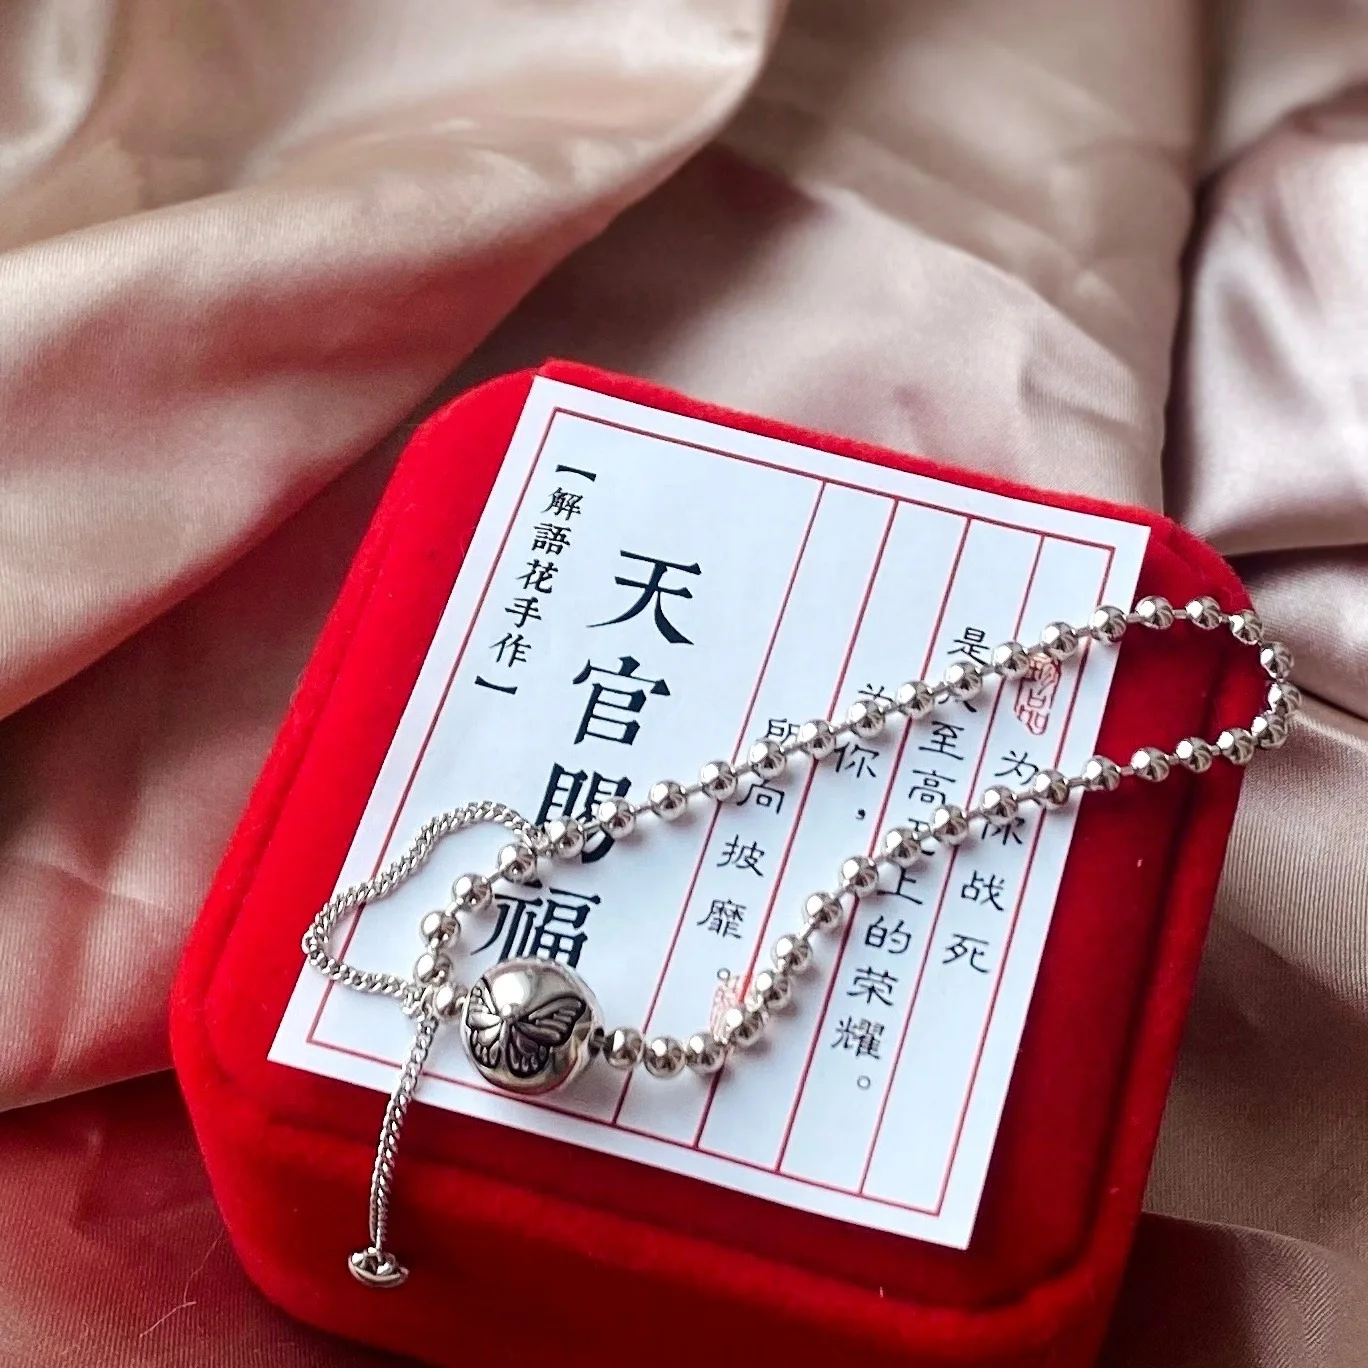 Details about   Anime Novel Tian Guan Ci Fu Xie Lian Chain Bracelet Accessories Cosplay Gift 